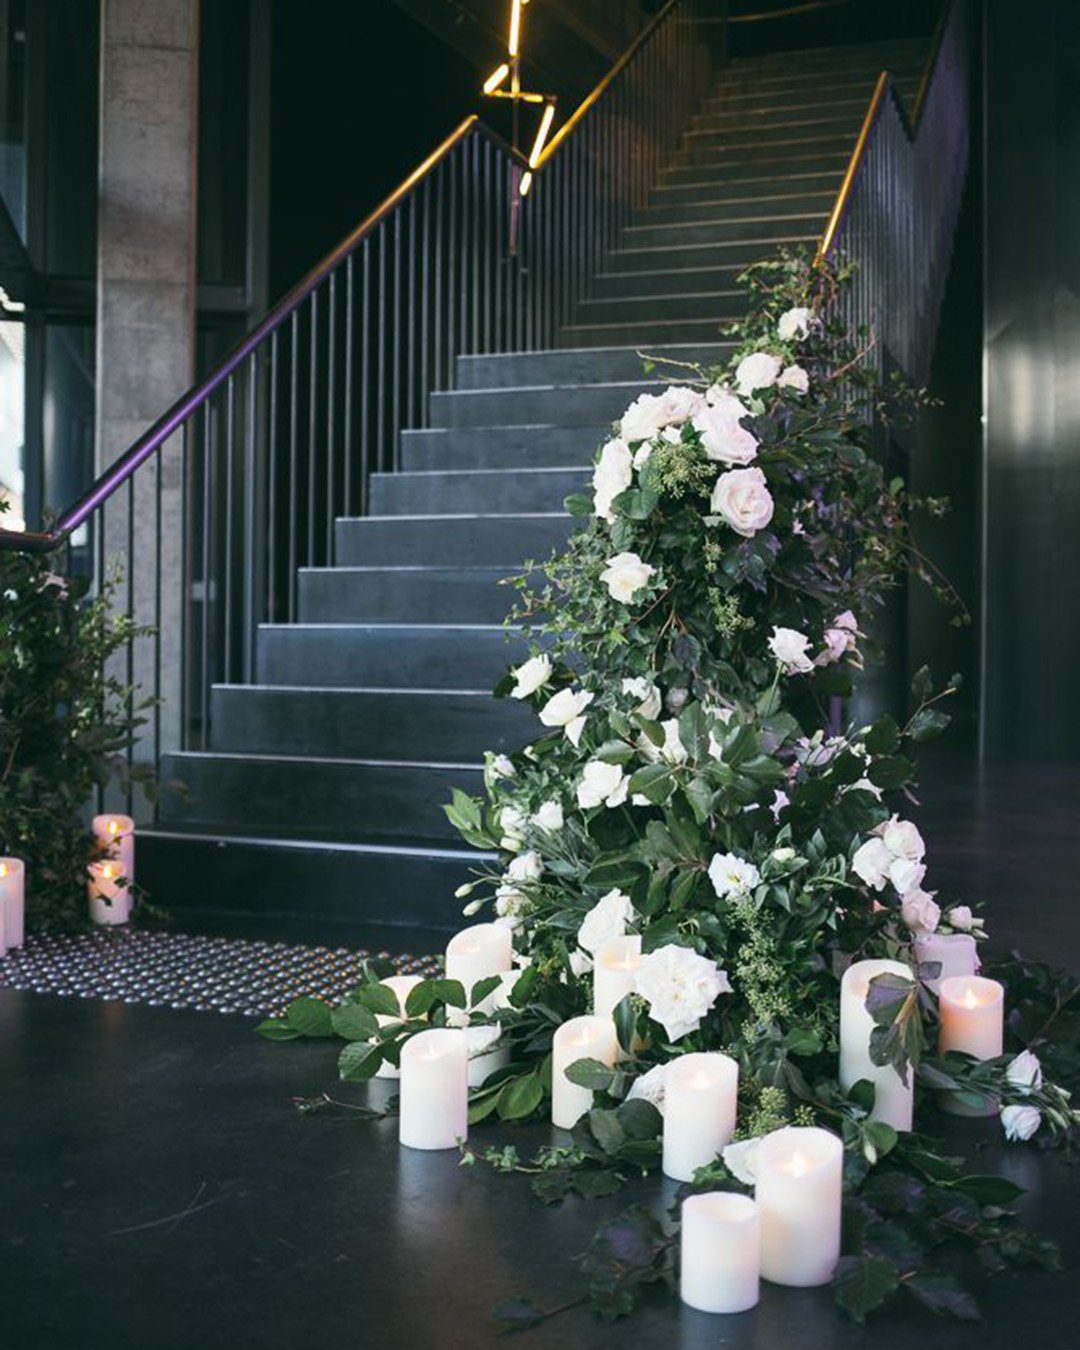 greenery wedding decor white flowers candles on the stairs hikari photo